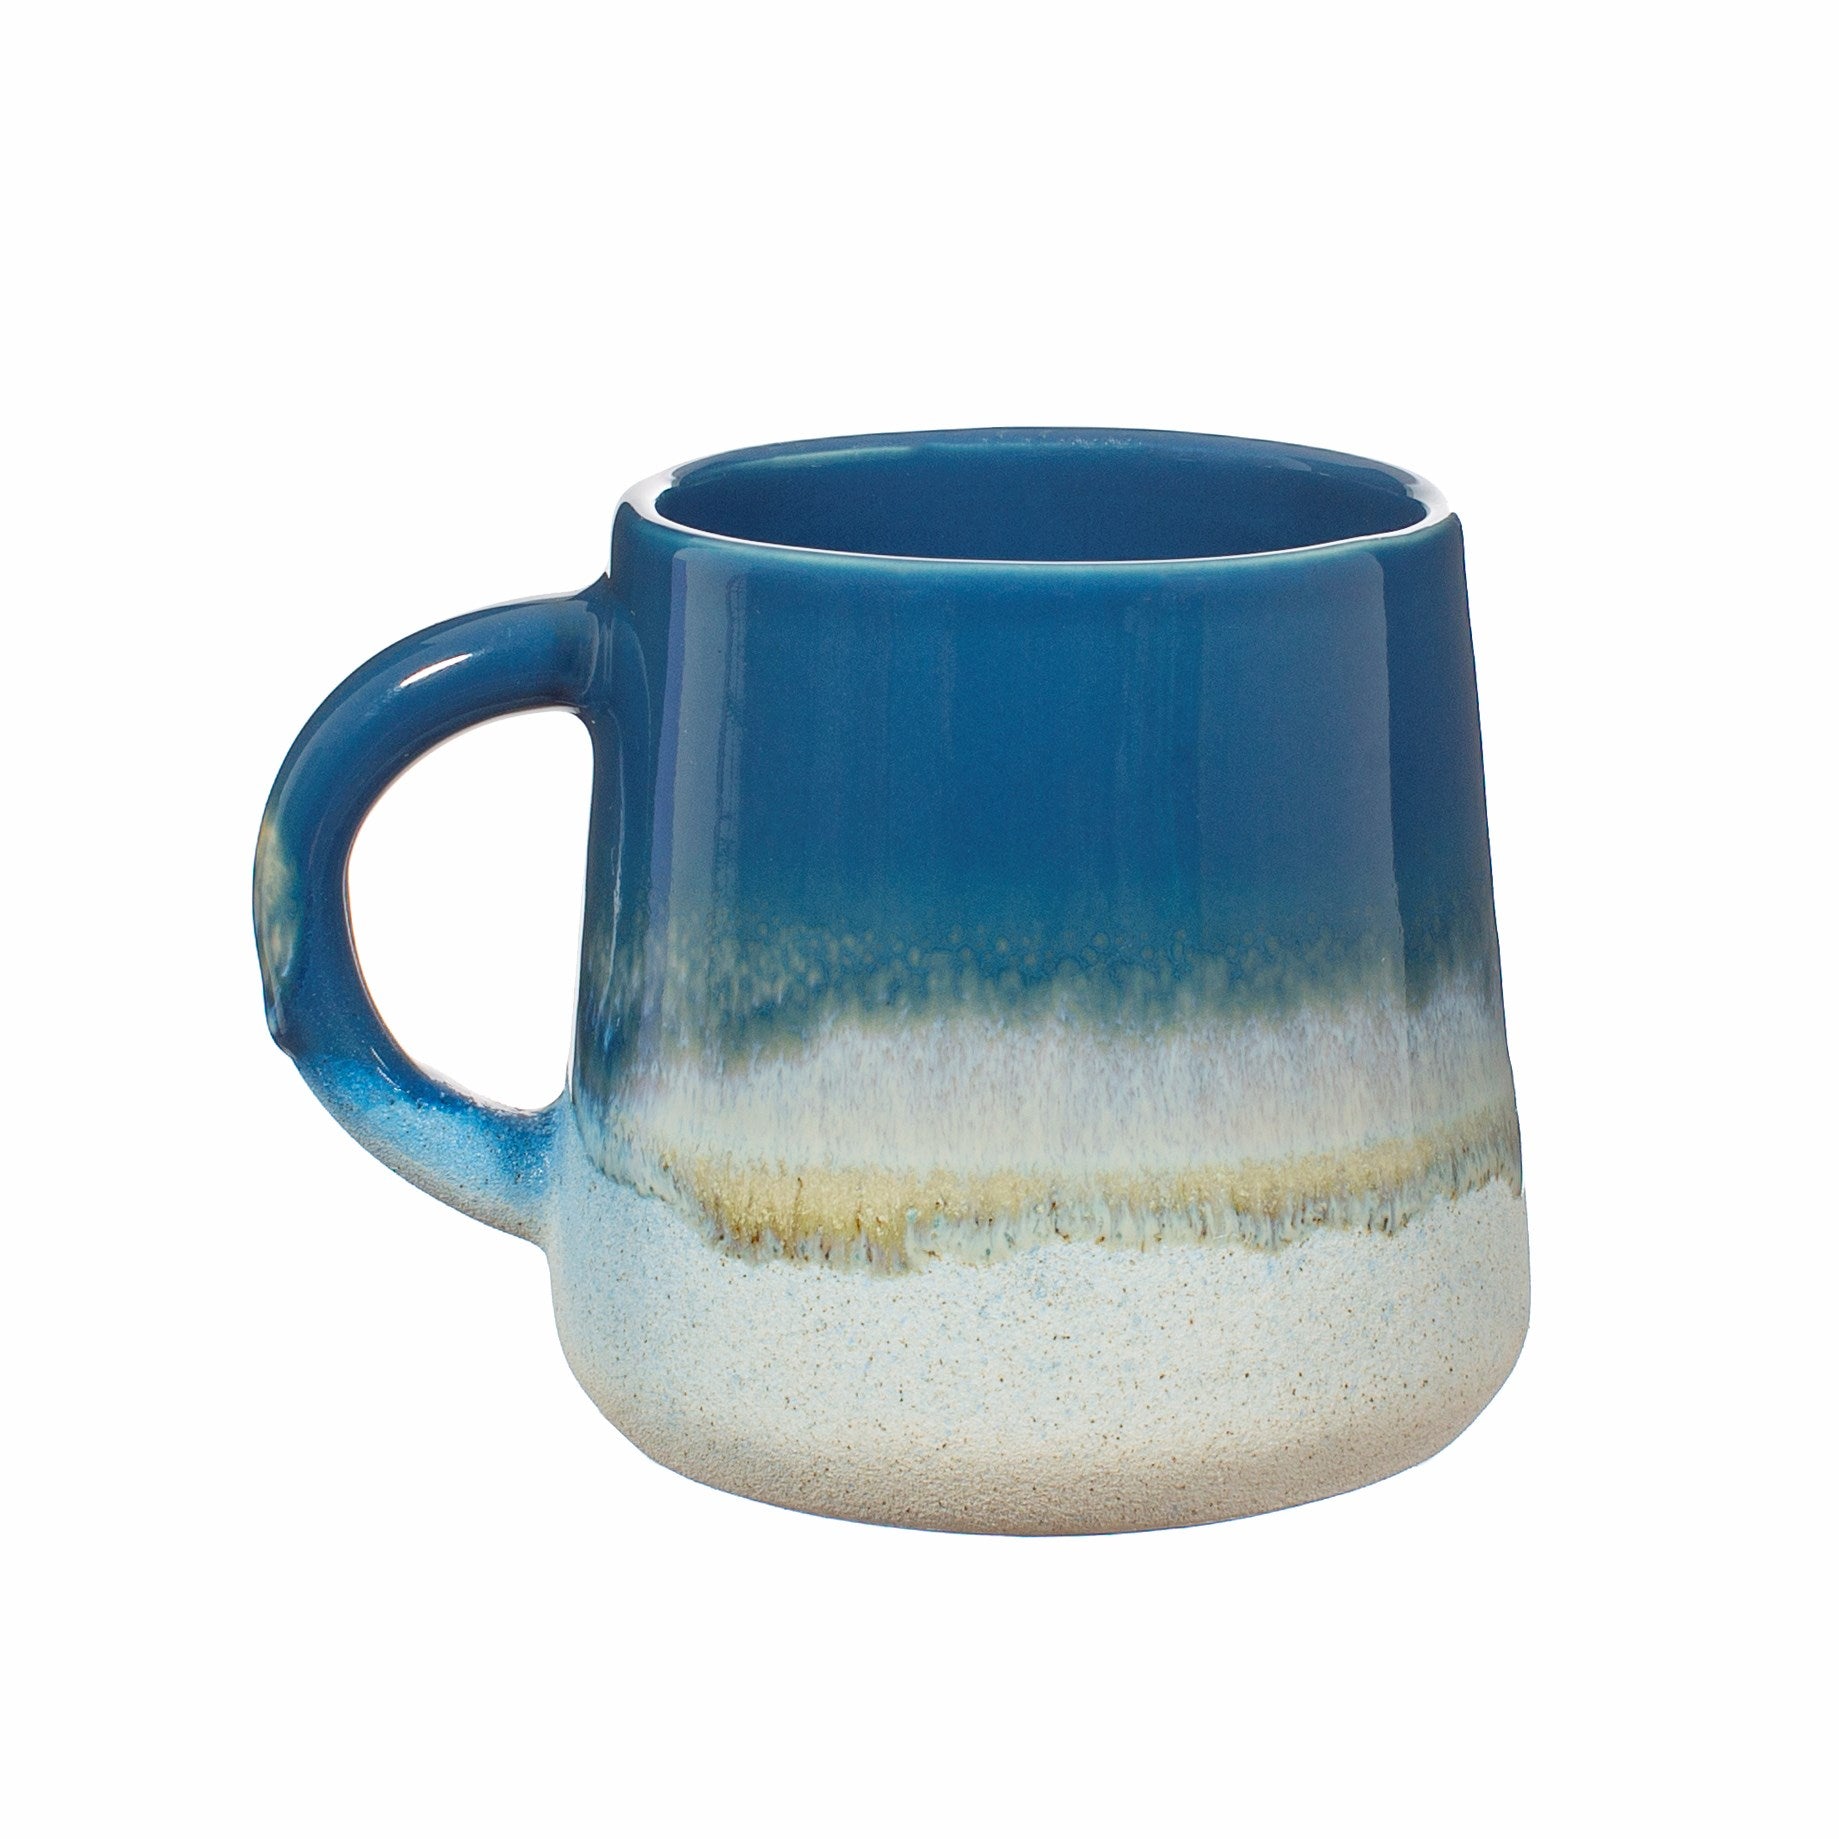 Mojave Glaze Blue Mug from Sass and Belle